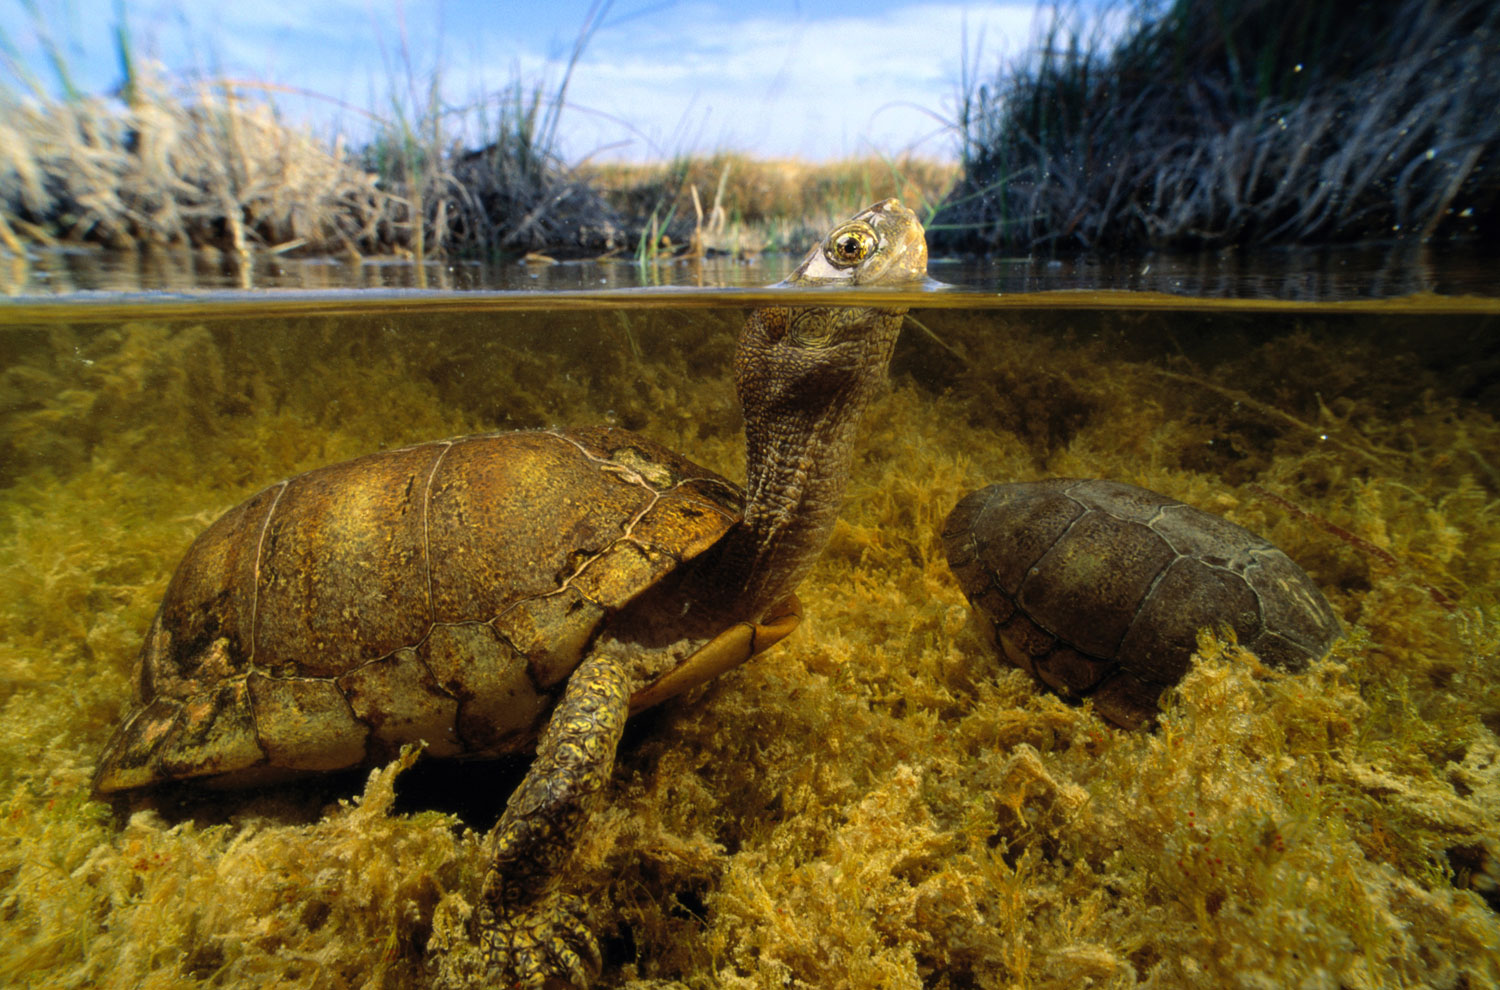 Coahuilan box turtle